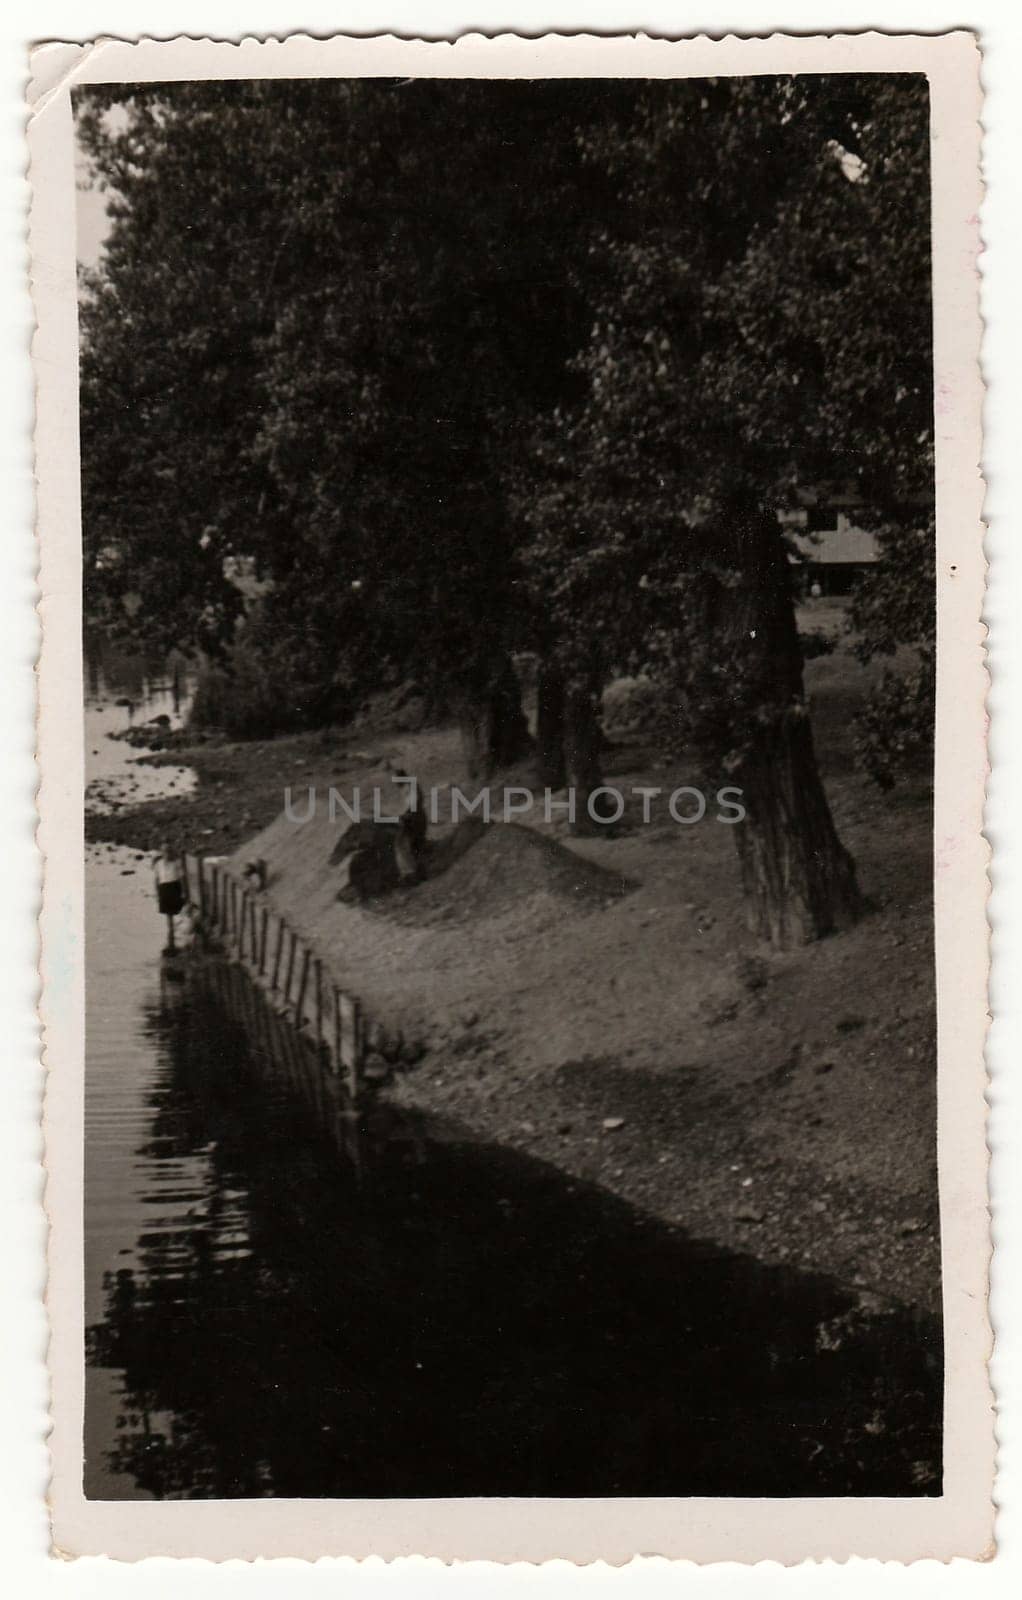 MLADA BOLESLAV, THE CZECHOSLOVAK REPUBLIC - CIRCA 1930s: Vintage photo shows view on the river and riverside. Black white antique photo.